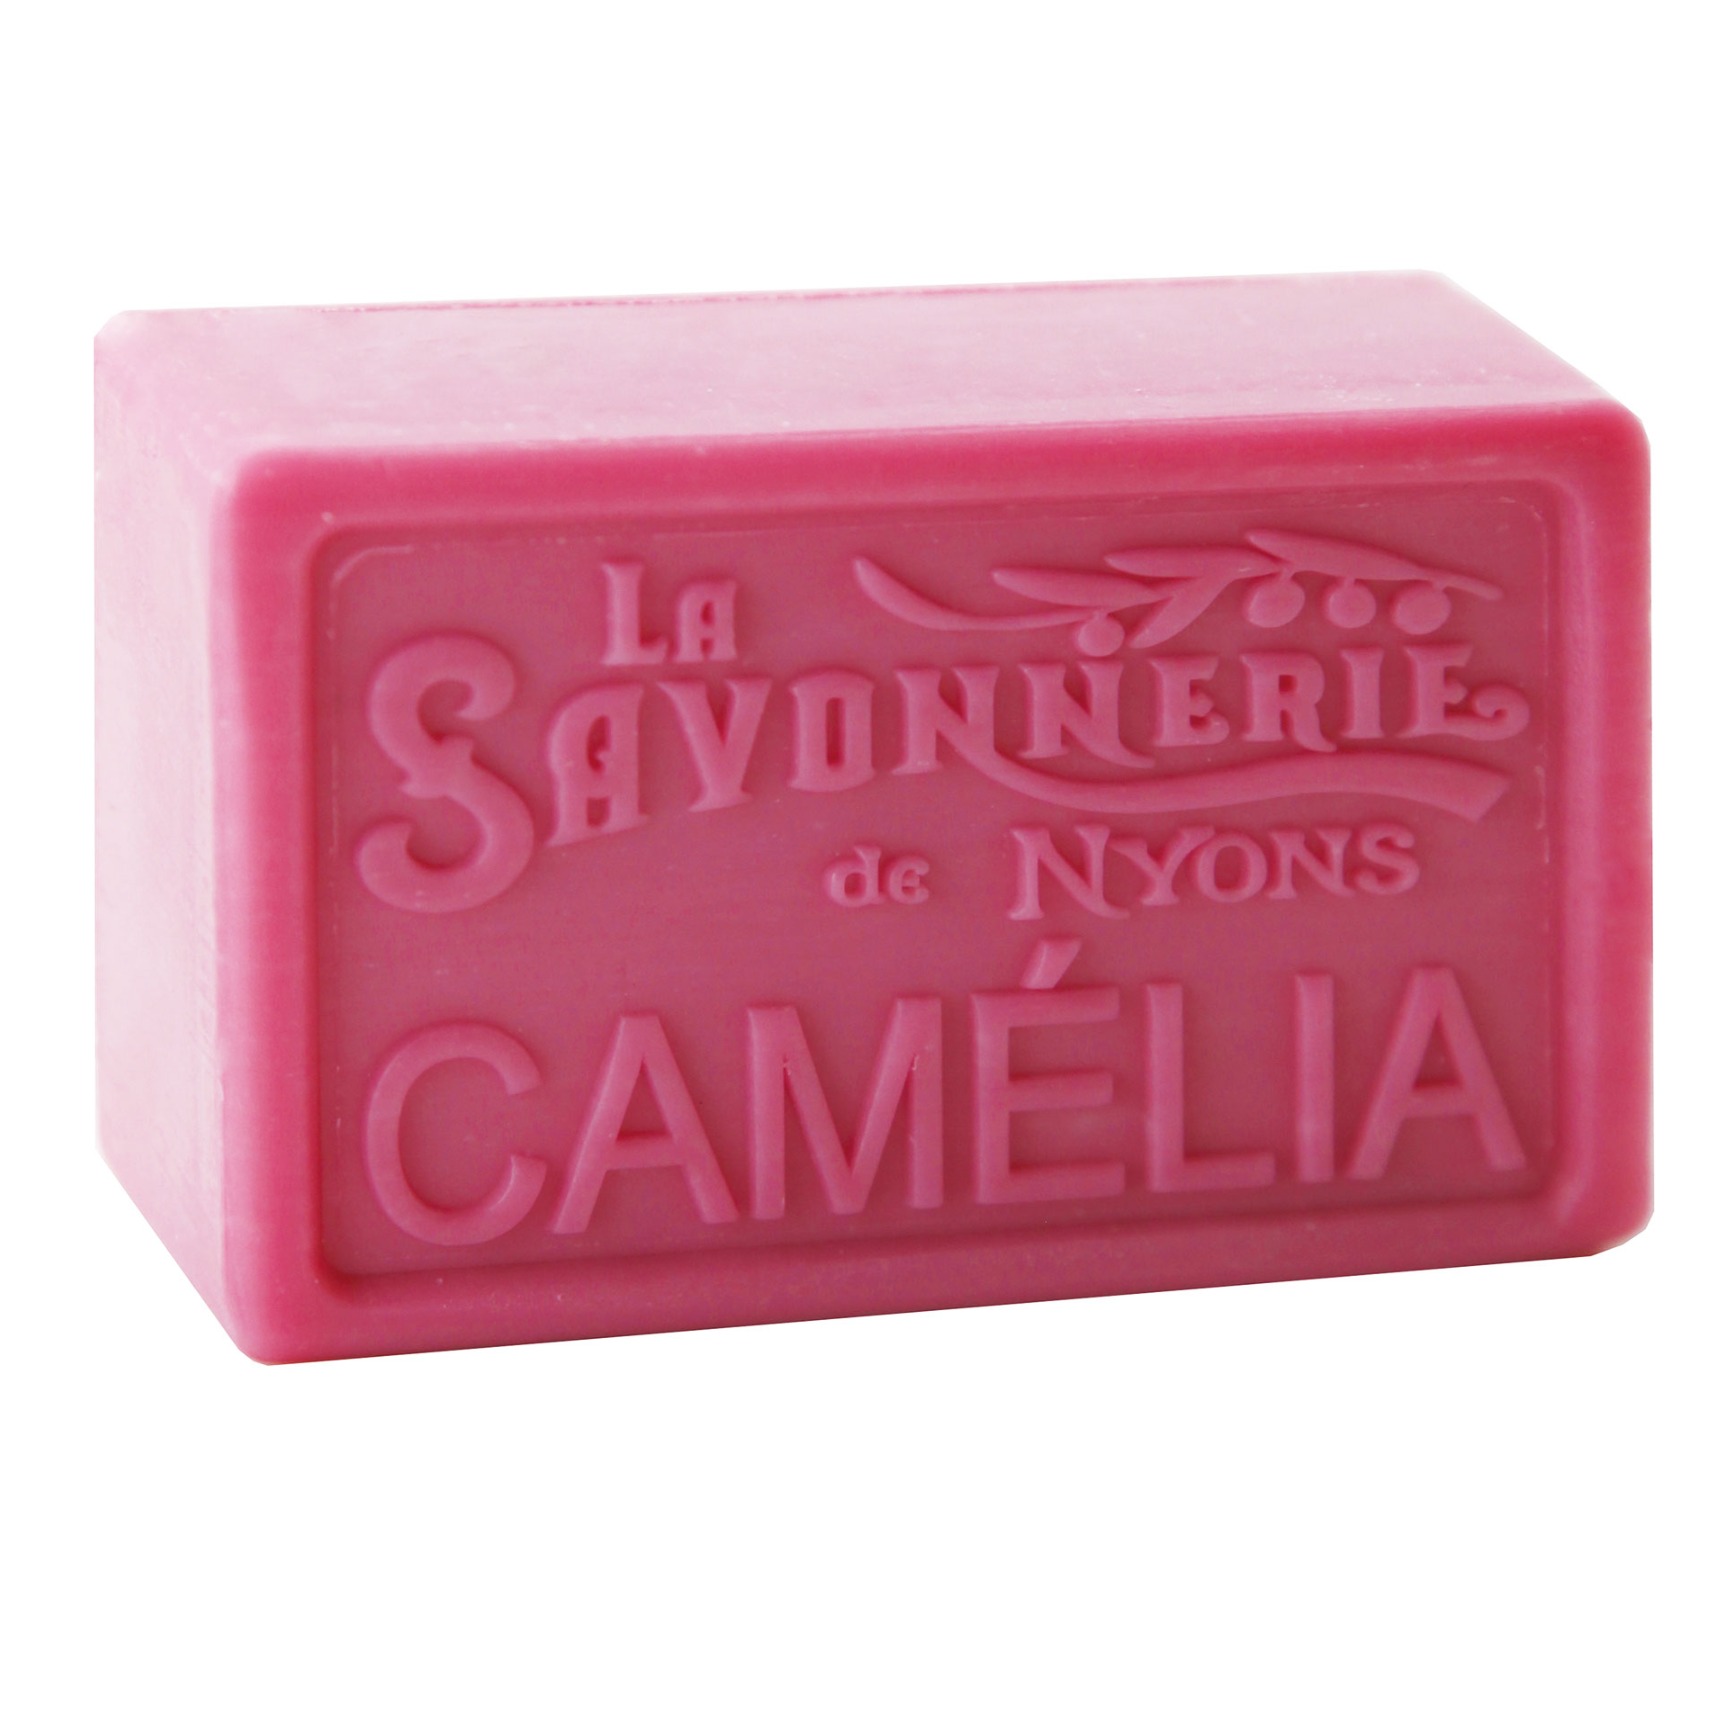 Camellia Soap, 3.5oz